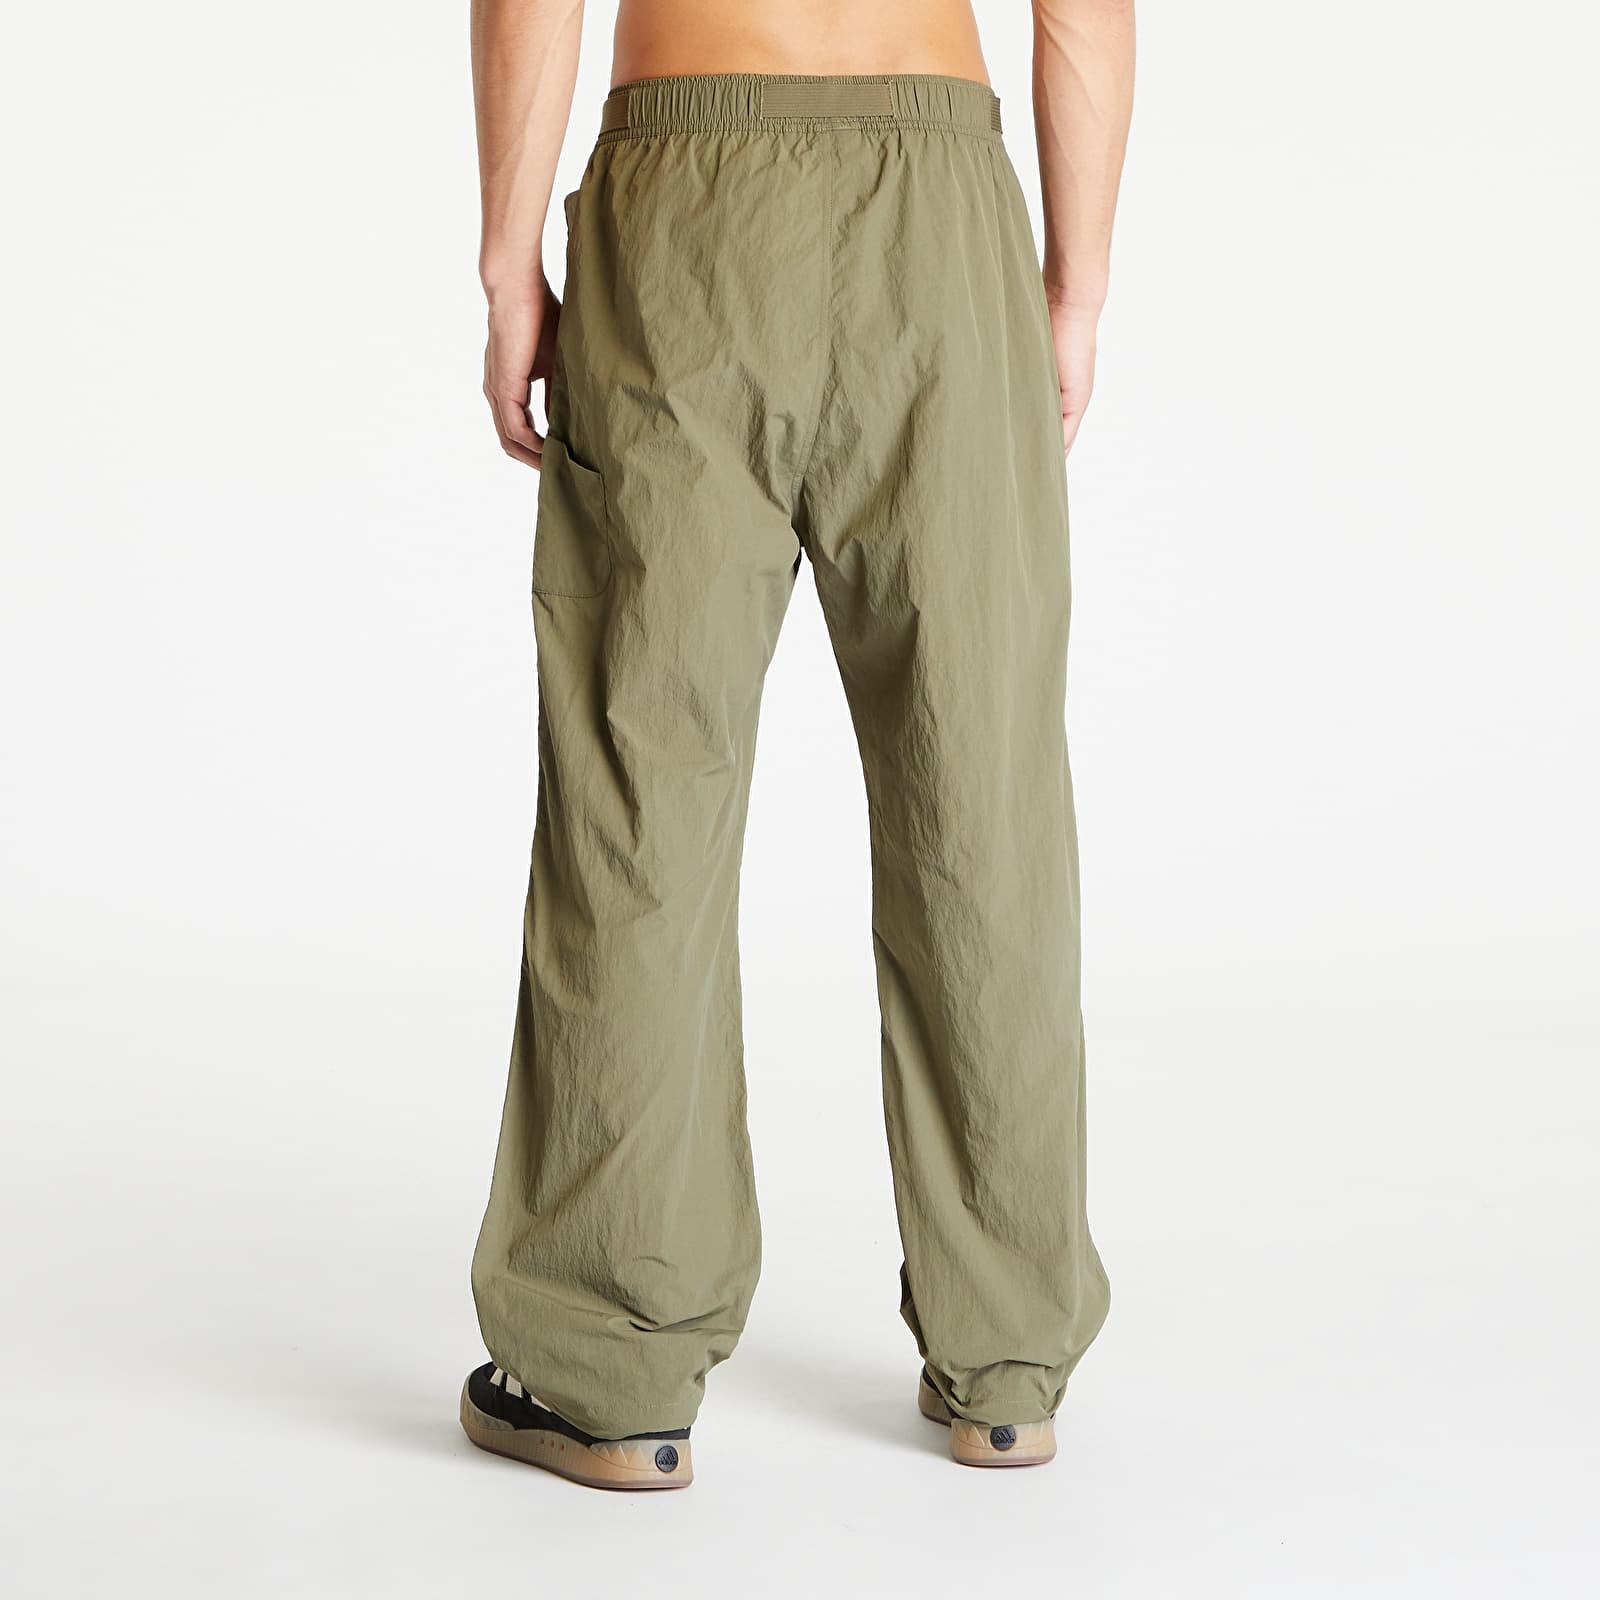 adidas Originals Adventure Strata | for Men Pants in Cargo Olive Green Lyst